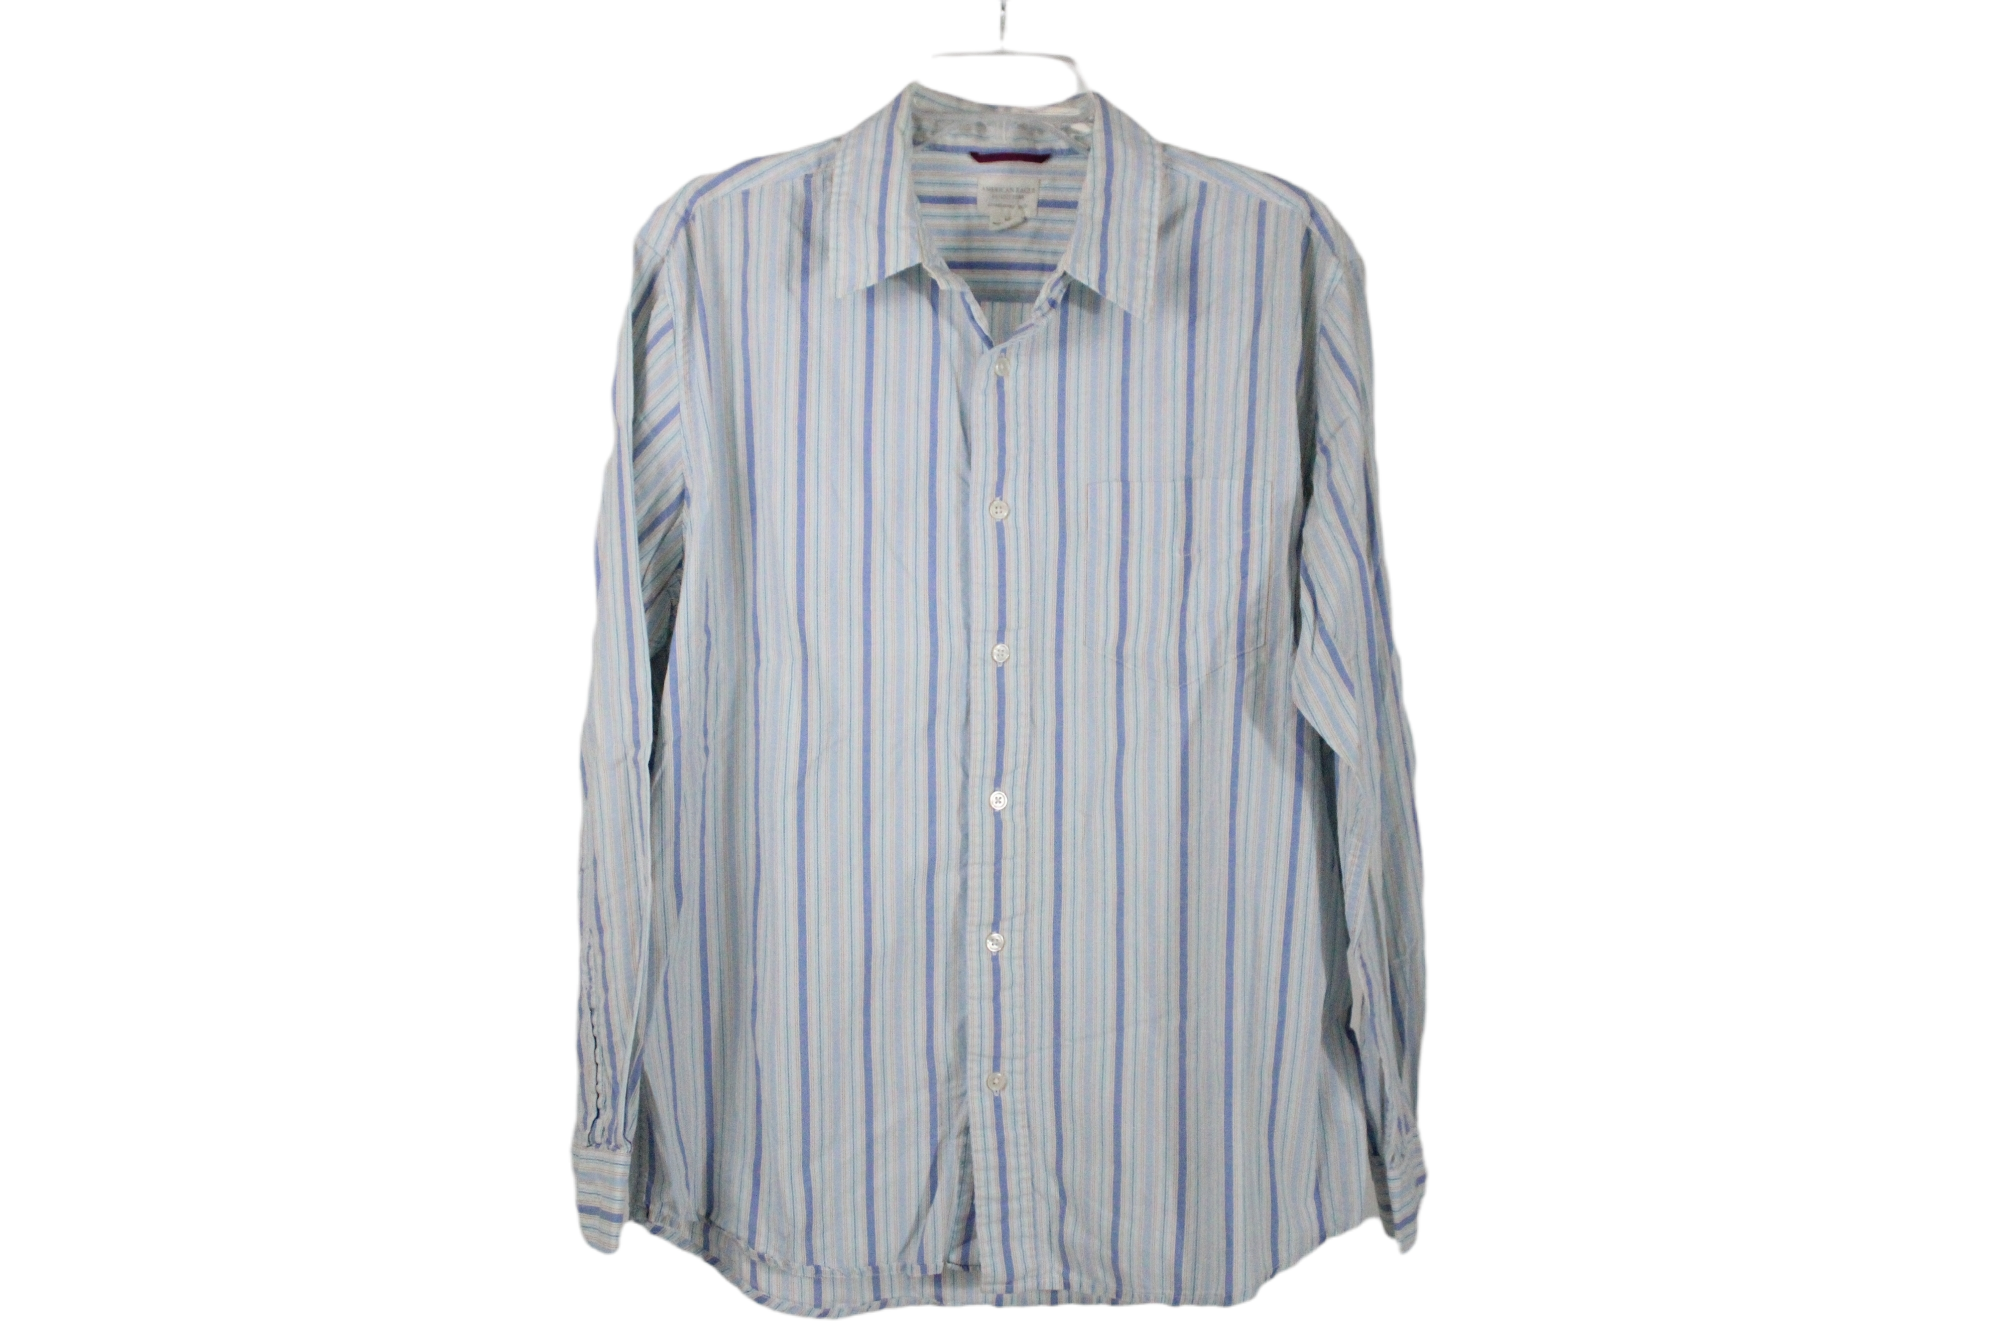 American Eagle Blue Striped Long Sleeved Shirt | L